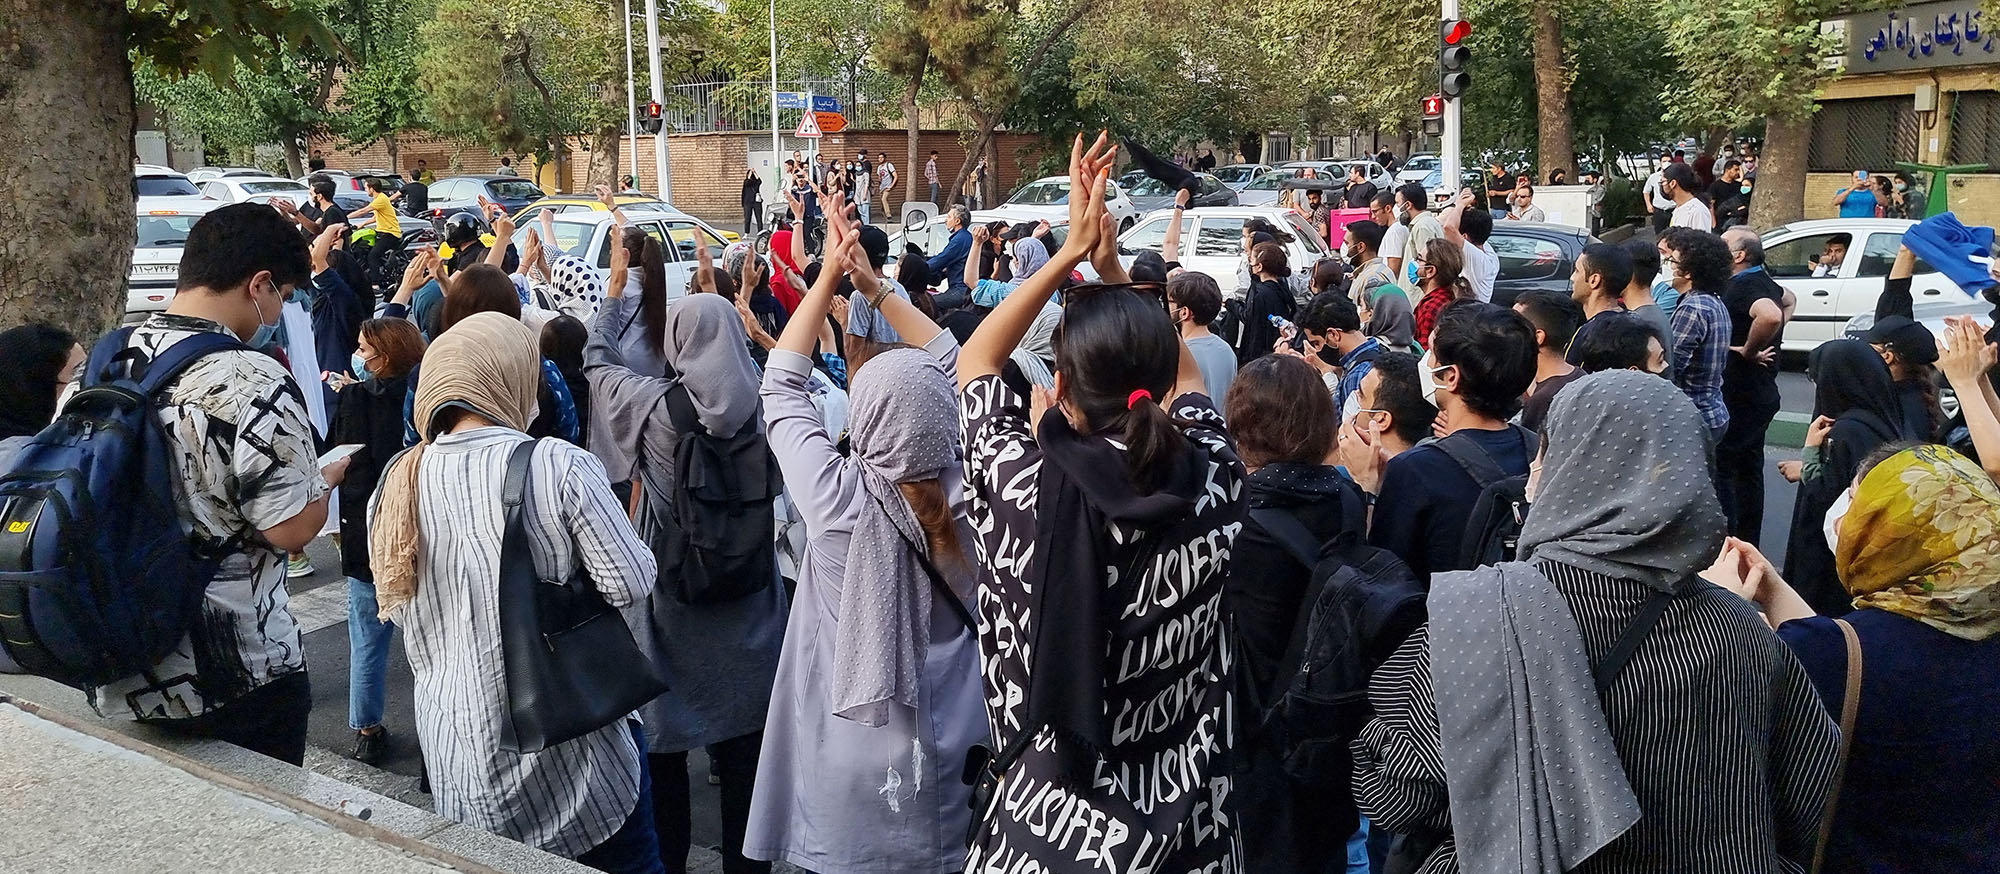 Iranian women are demanding religious freedom following the death of Mahsa Amini